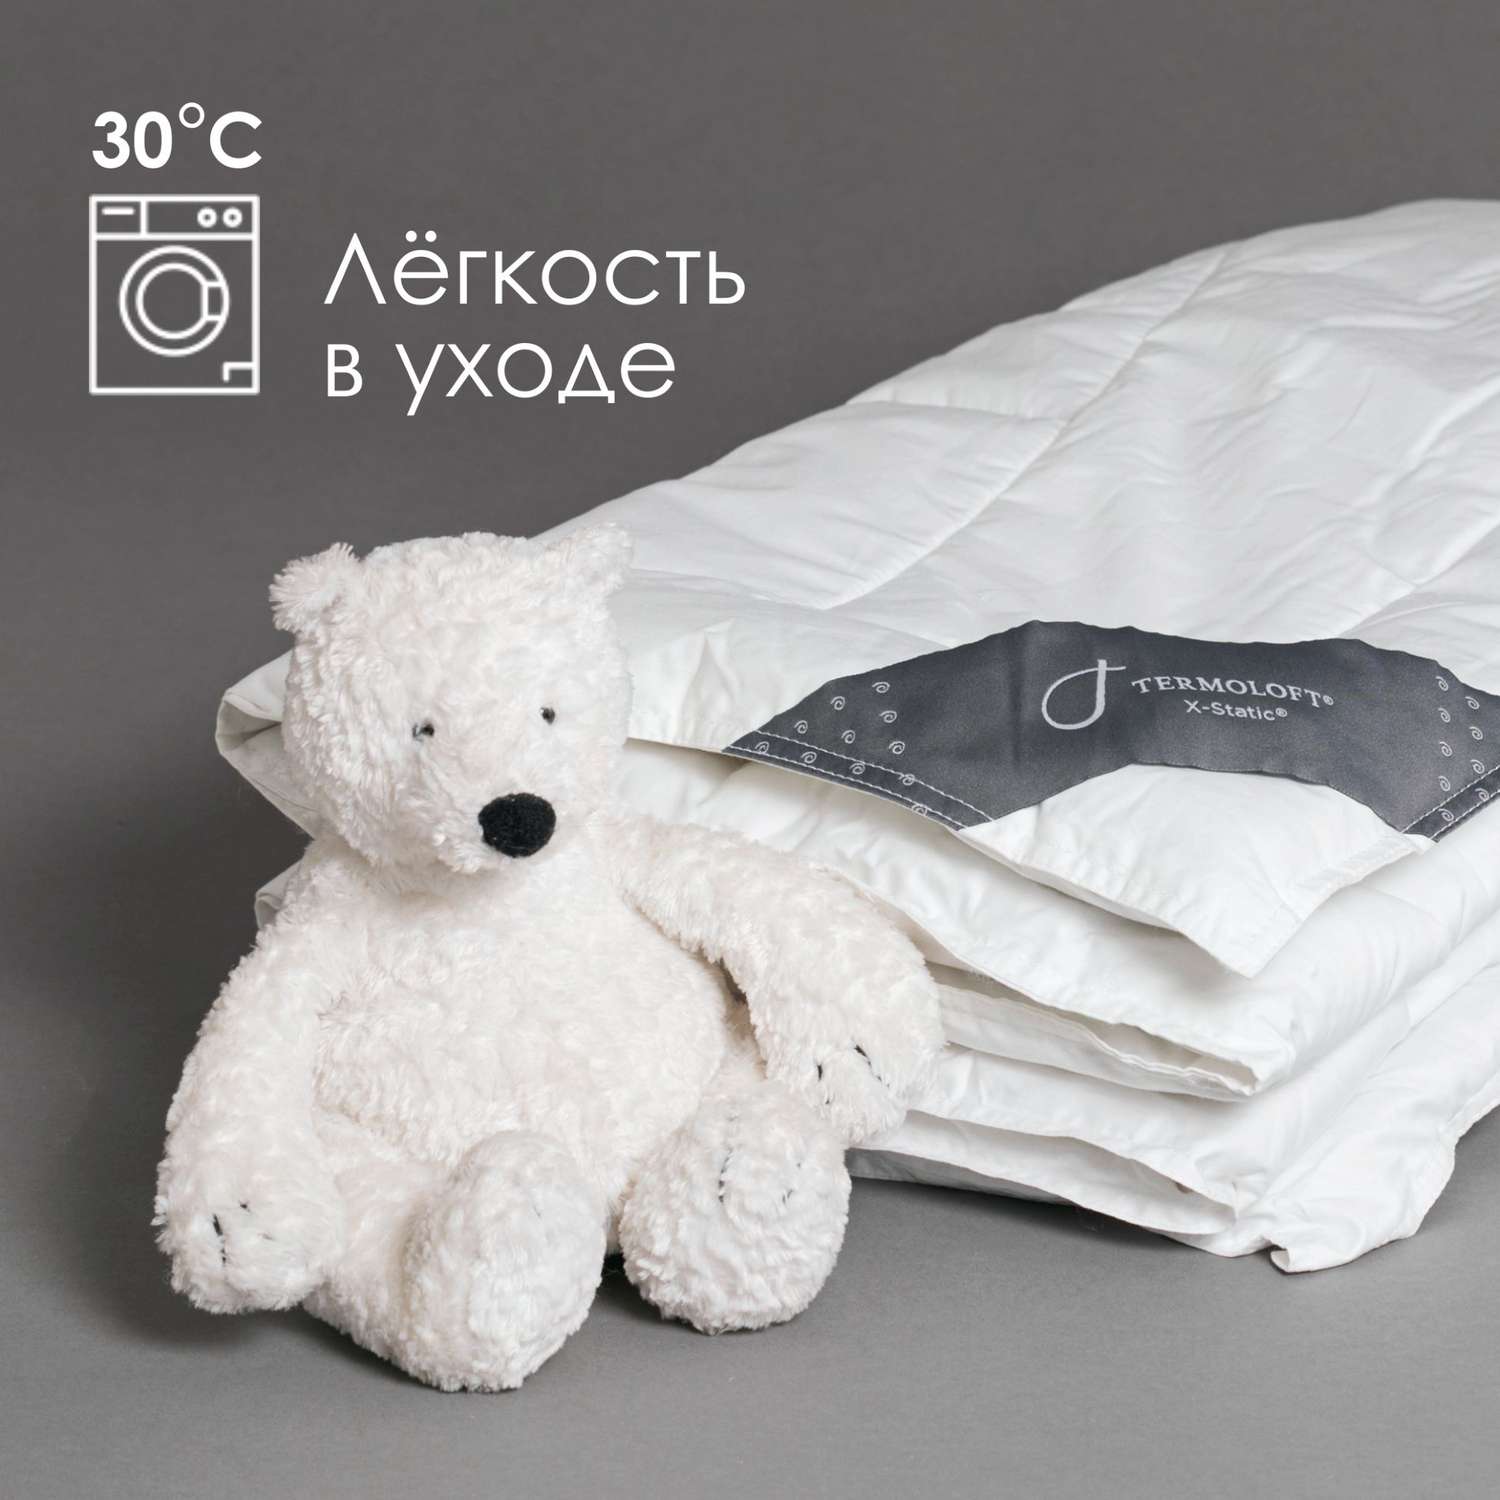 Одеяло детское Termoloft X-Static с волокнами серебра 100х135 - фото 7